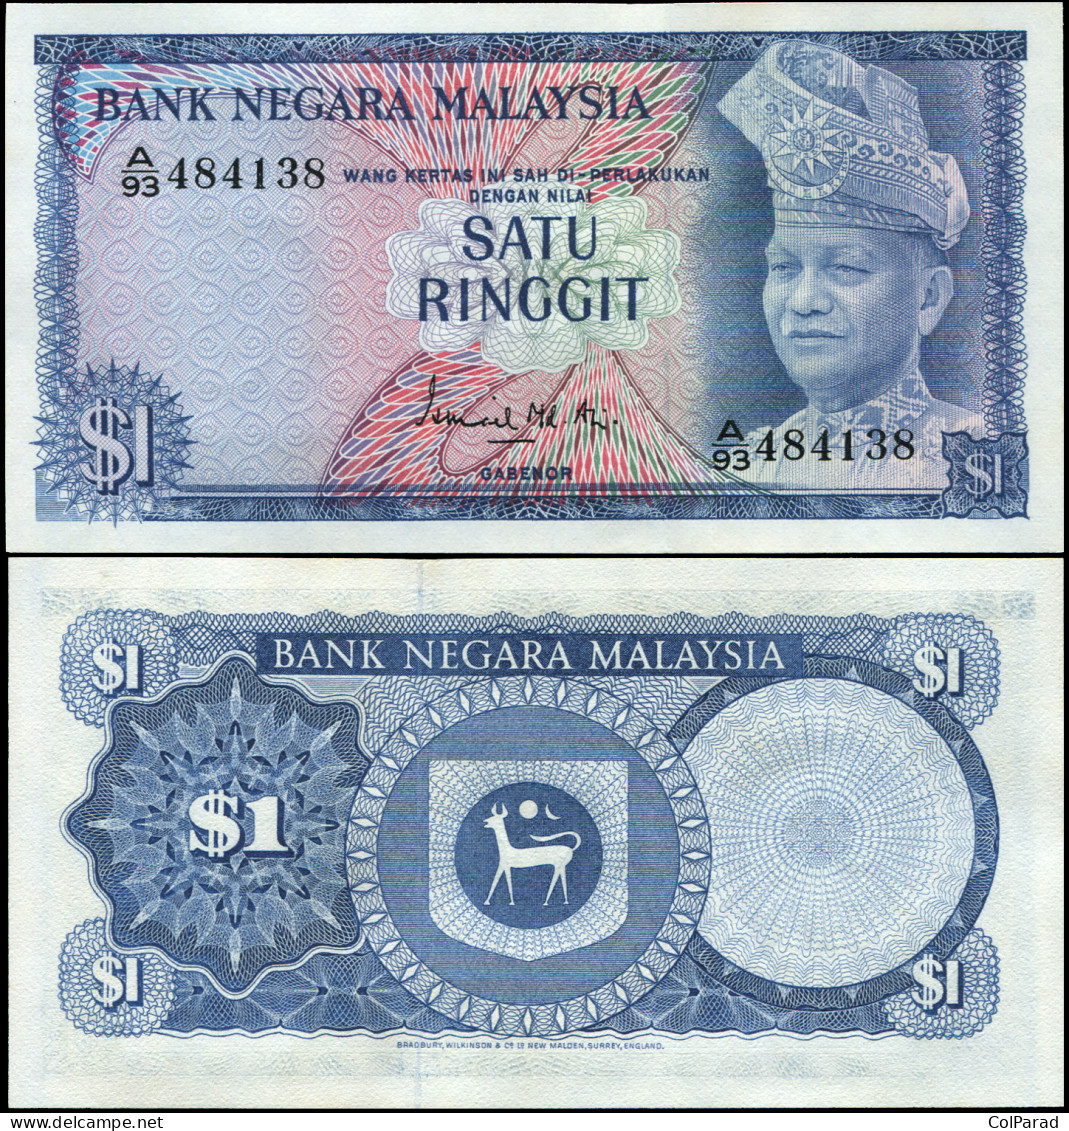 MALAYSIA 1 RINGGIT - ND (1967) - Paper Unc - P.1a Banknote - Malasia